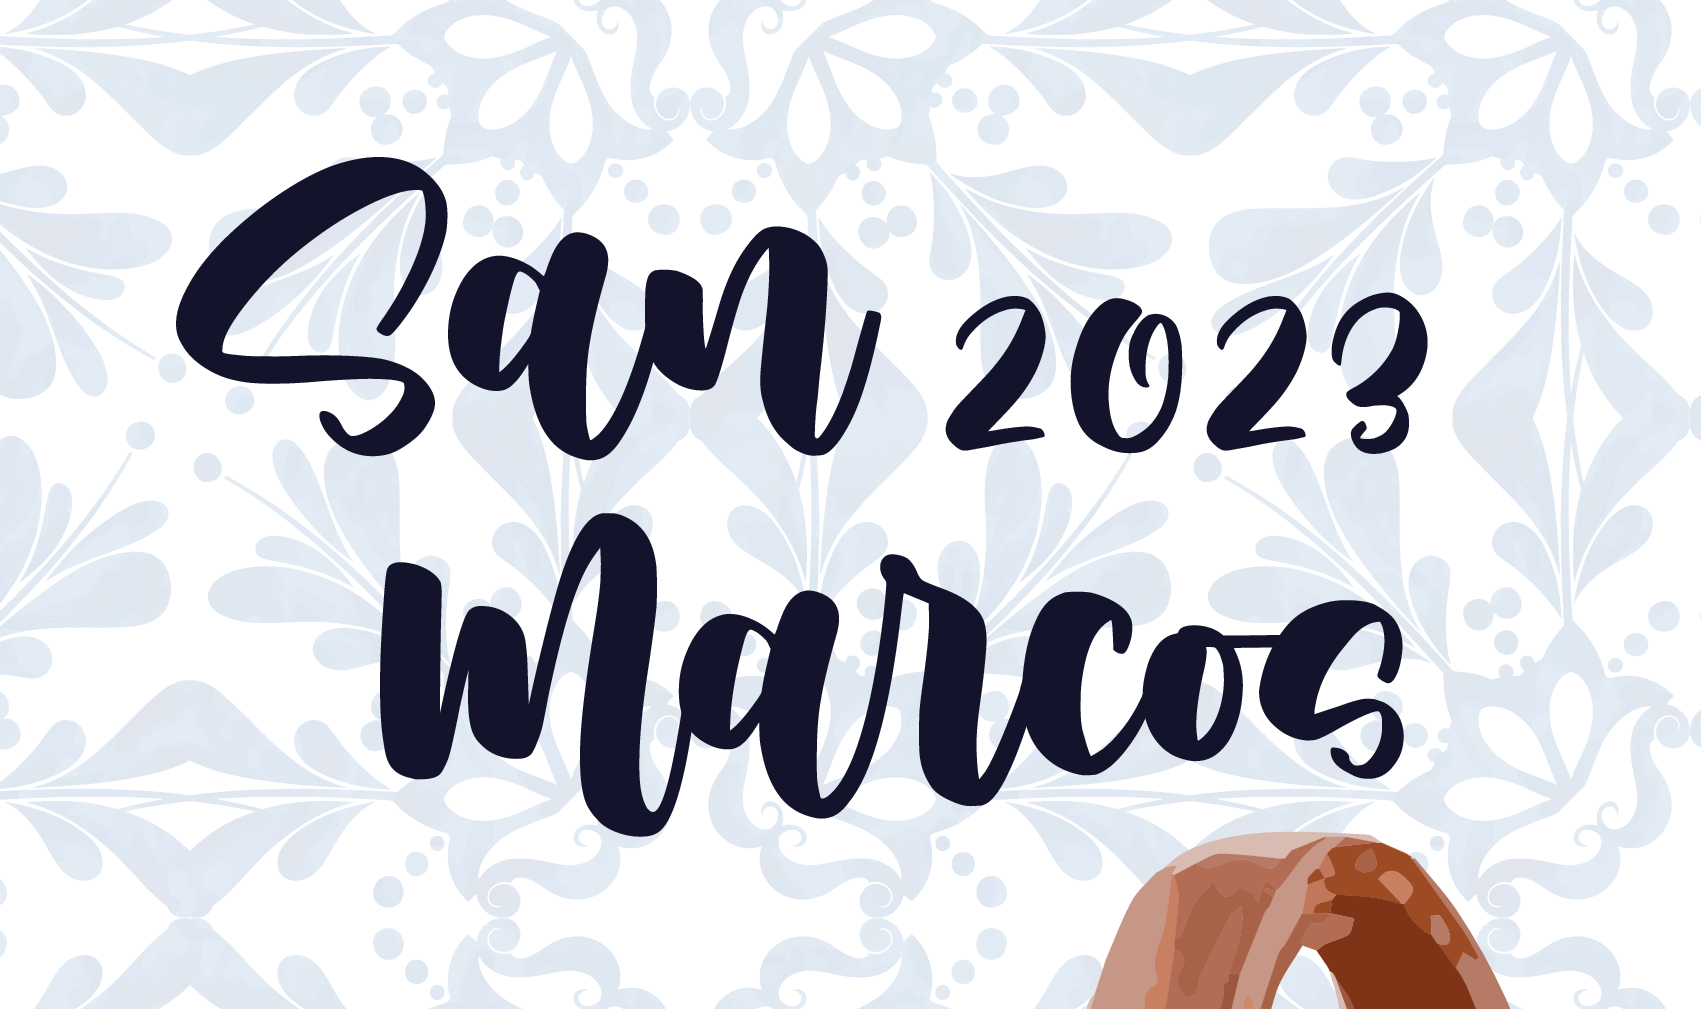 San Marcos 2023